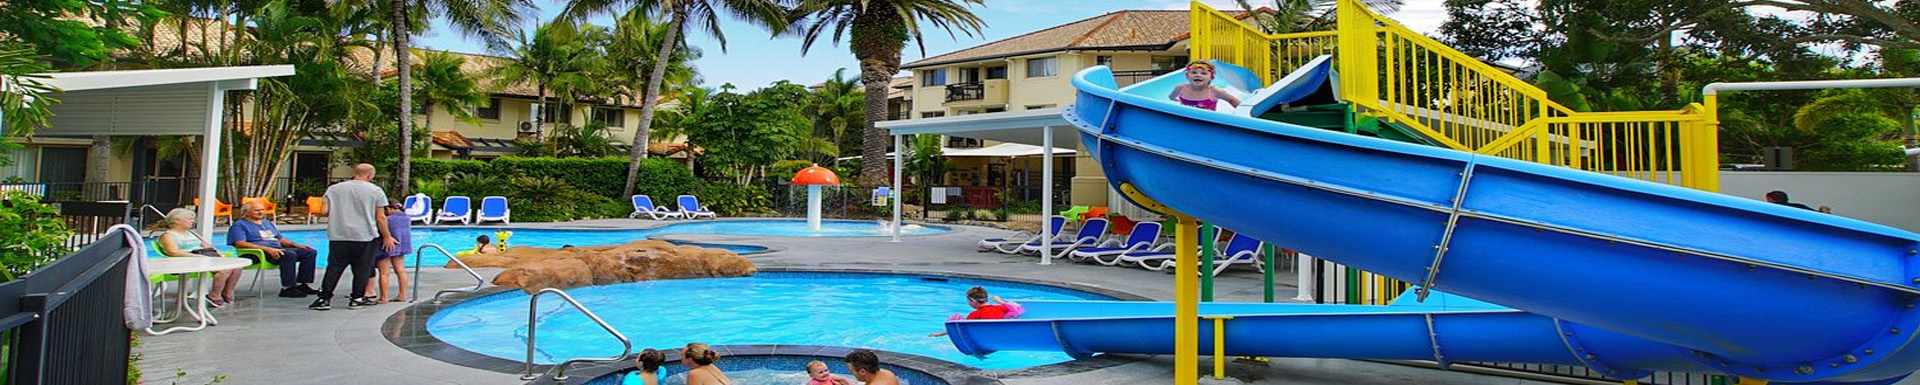 Turtle Beach Resort Mermaid Beach, Accor Vacation Club Apartments